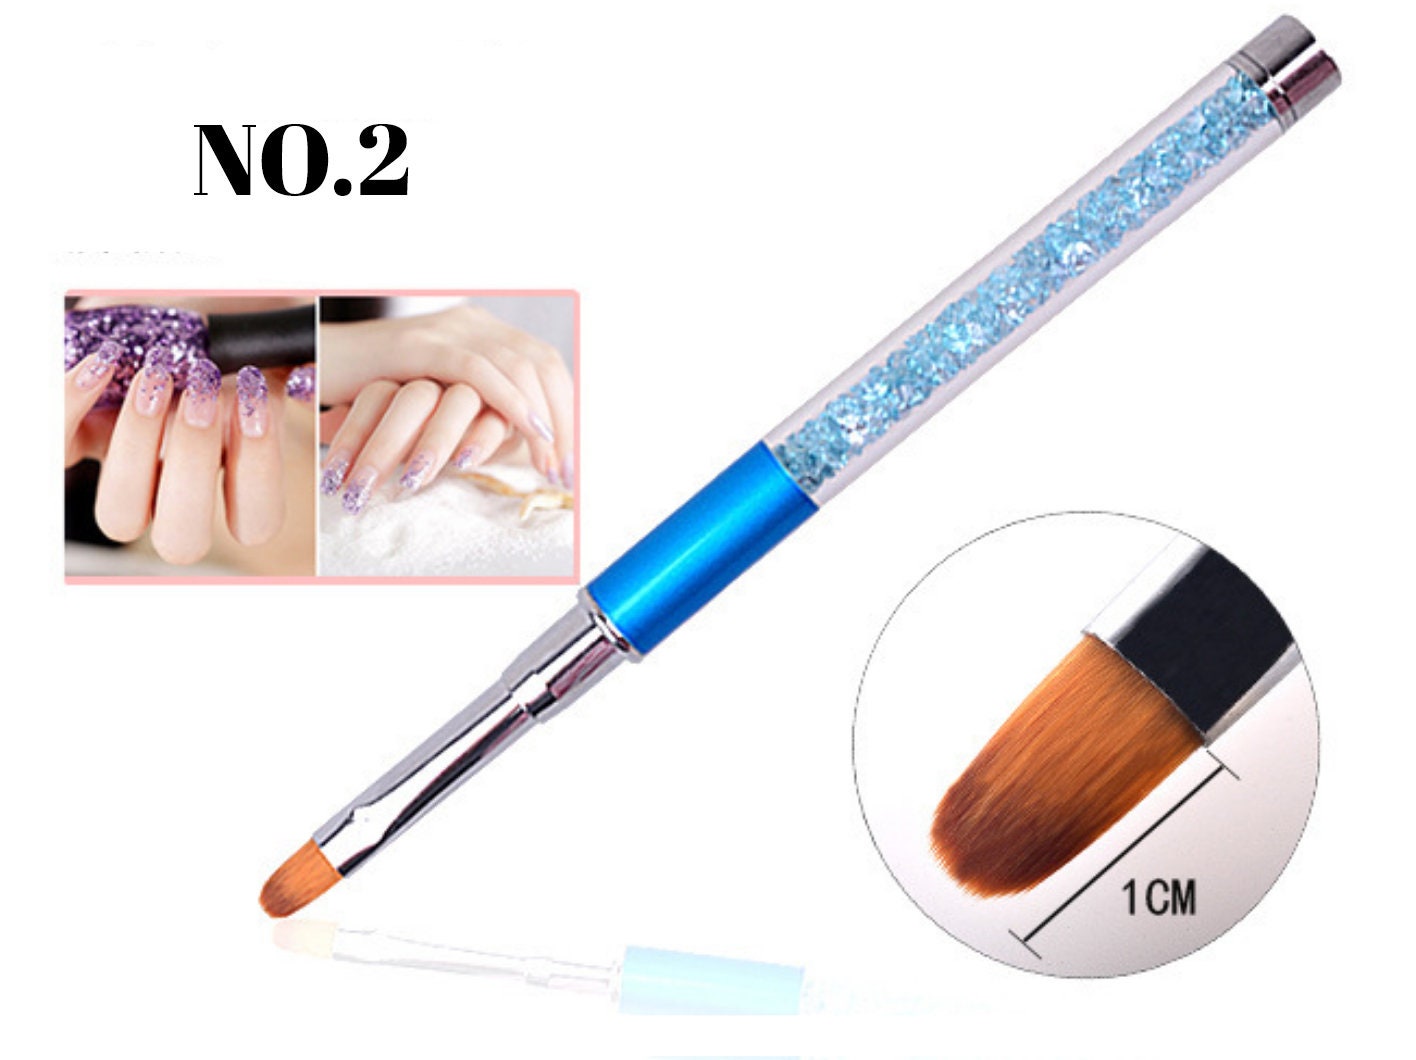 2. Professional Nail Art Striping Brush Set - wide 3